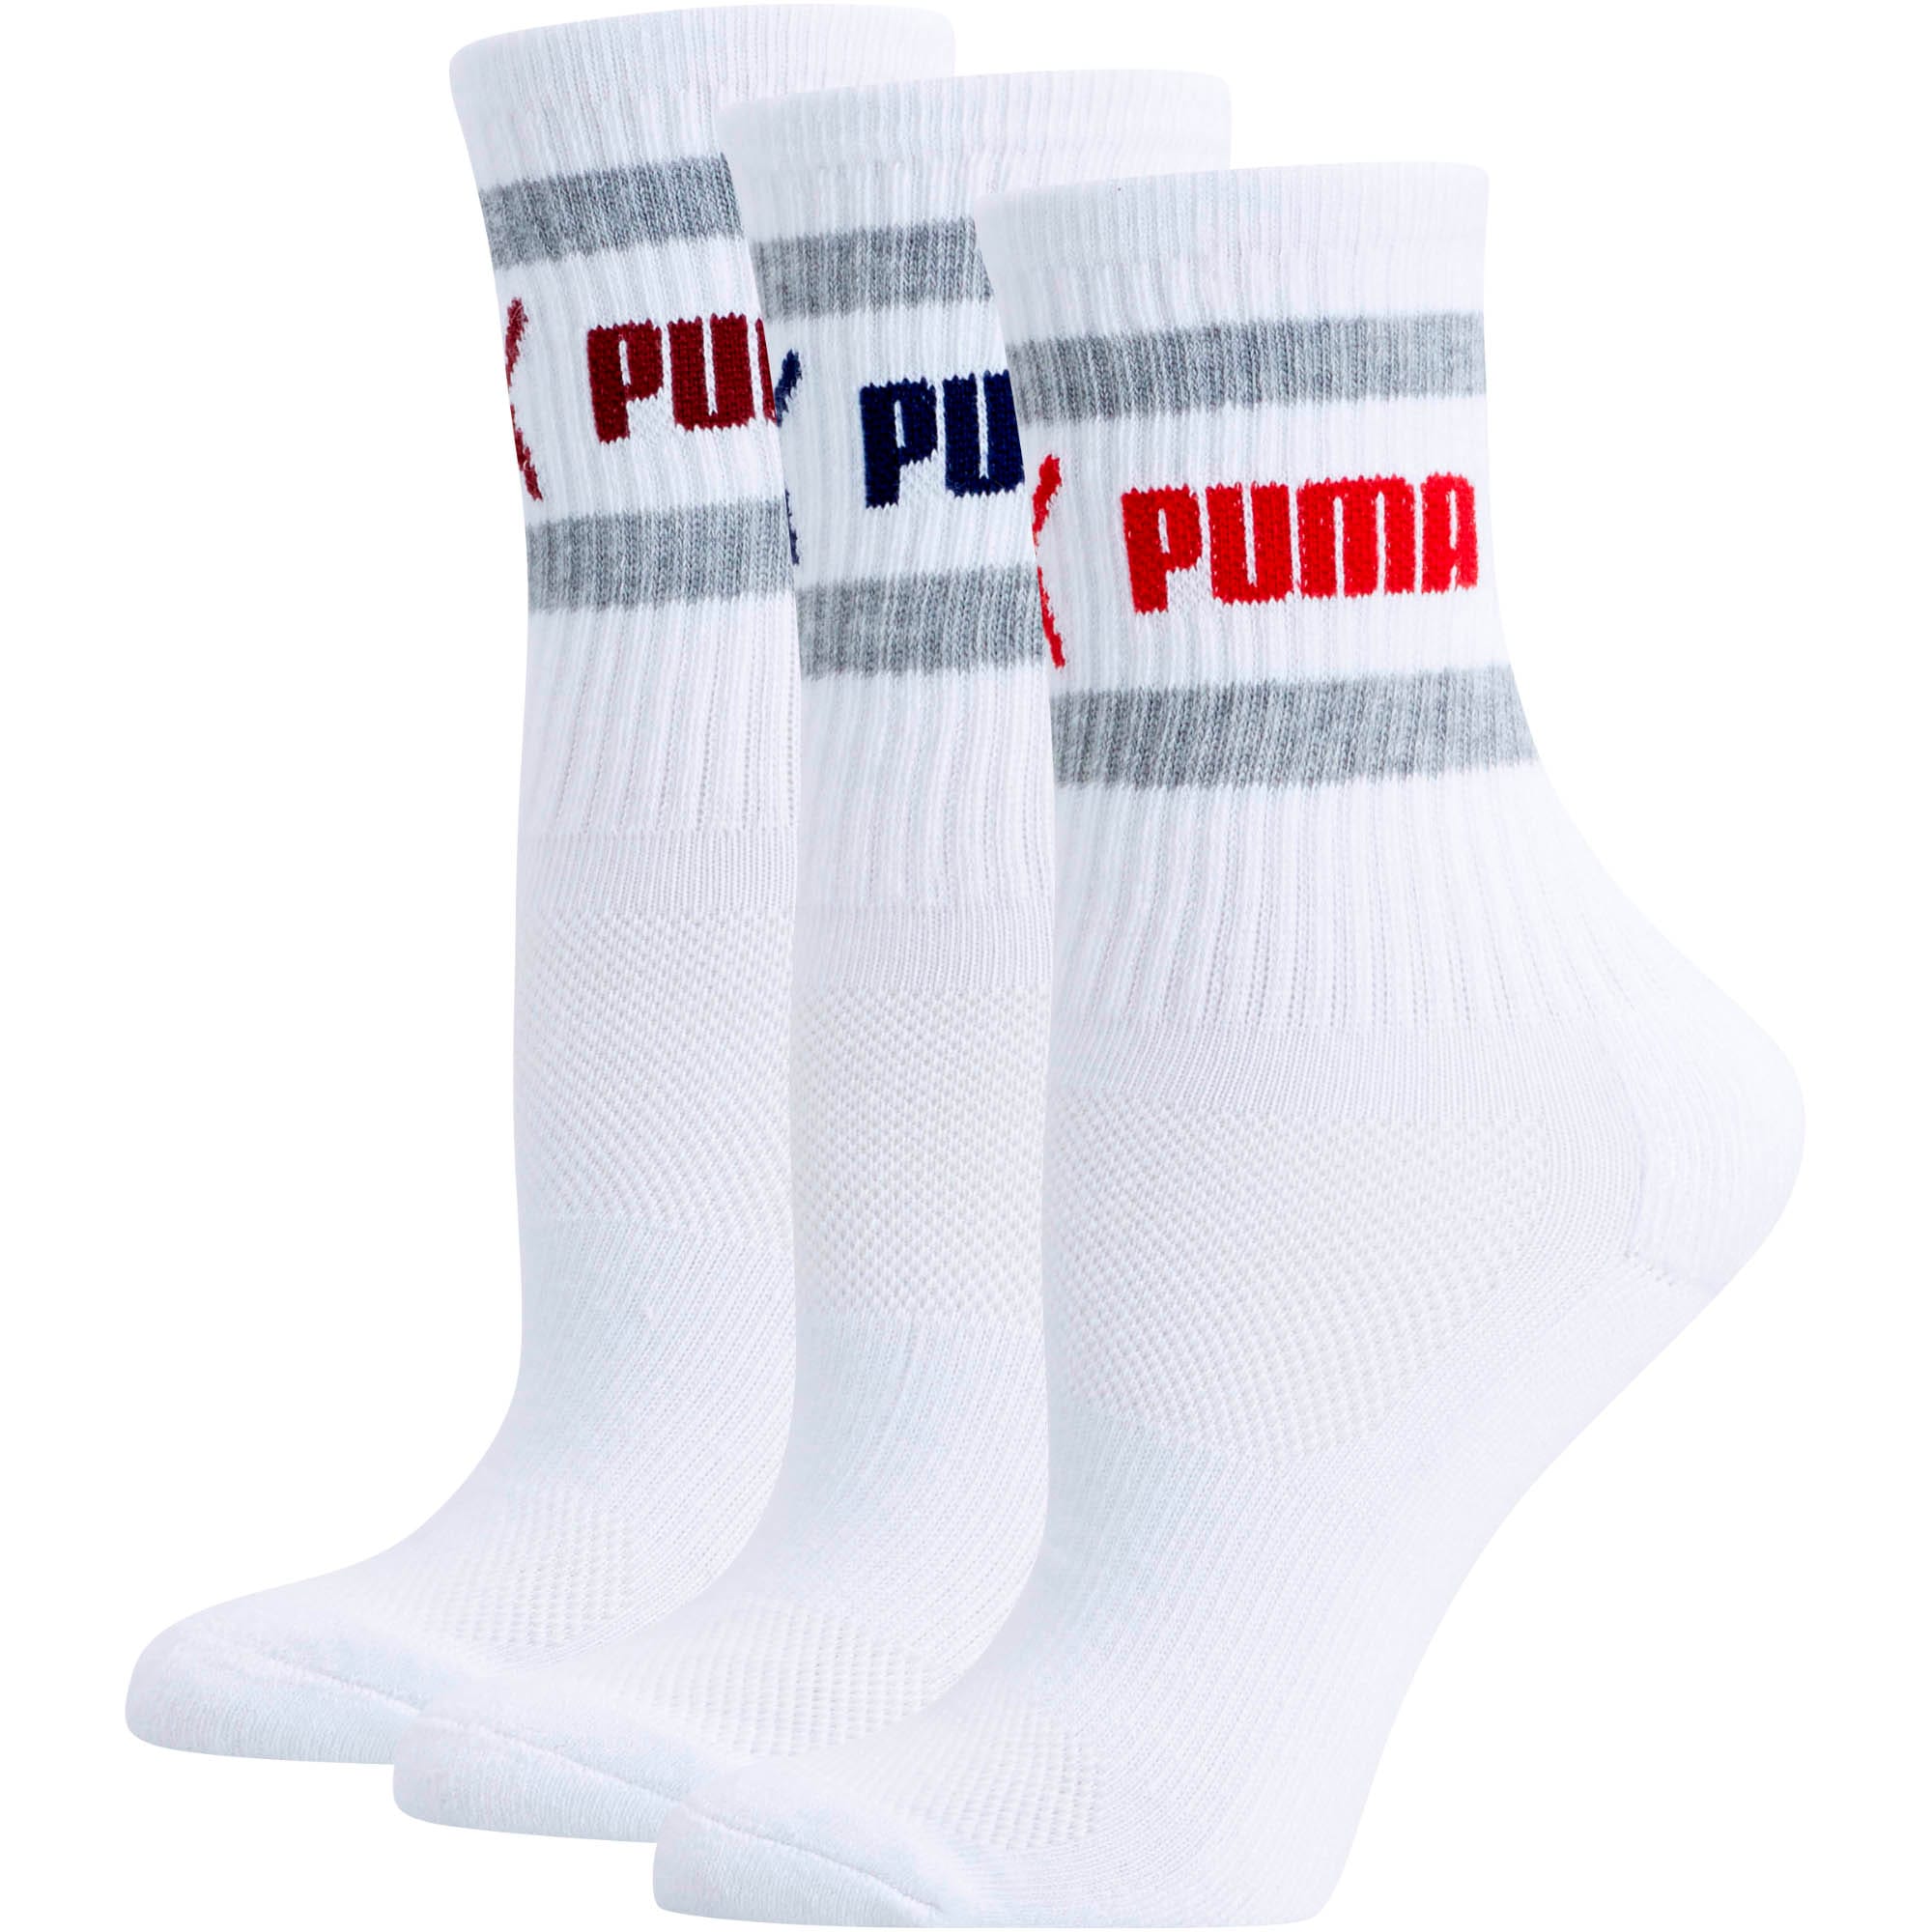 puma high top socks